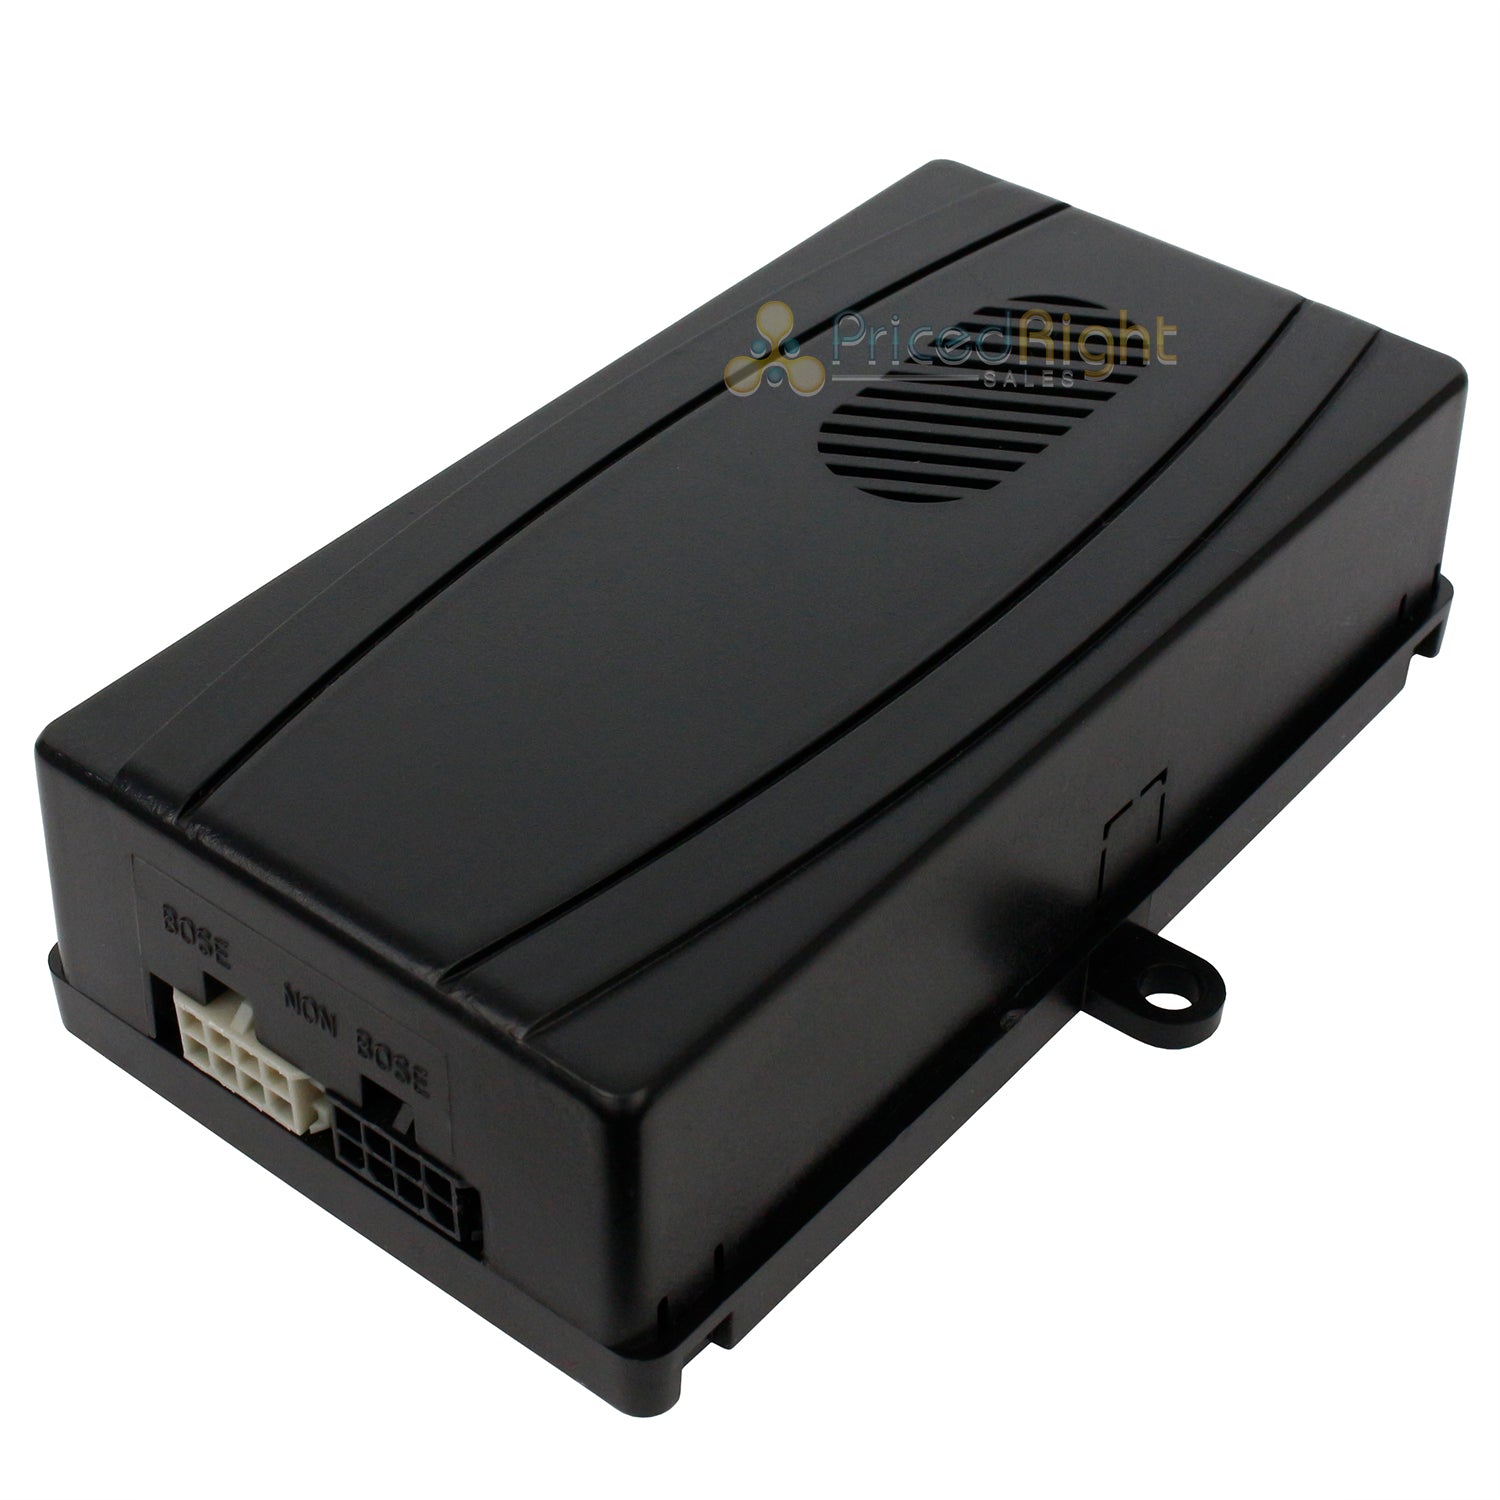 Crux OnStar Radio Replacement Interface For 2006-17 GM LAN 29 Bit Vehicles